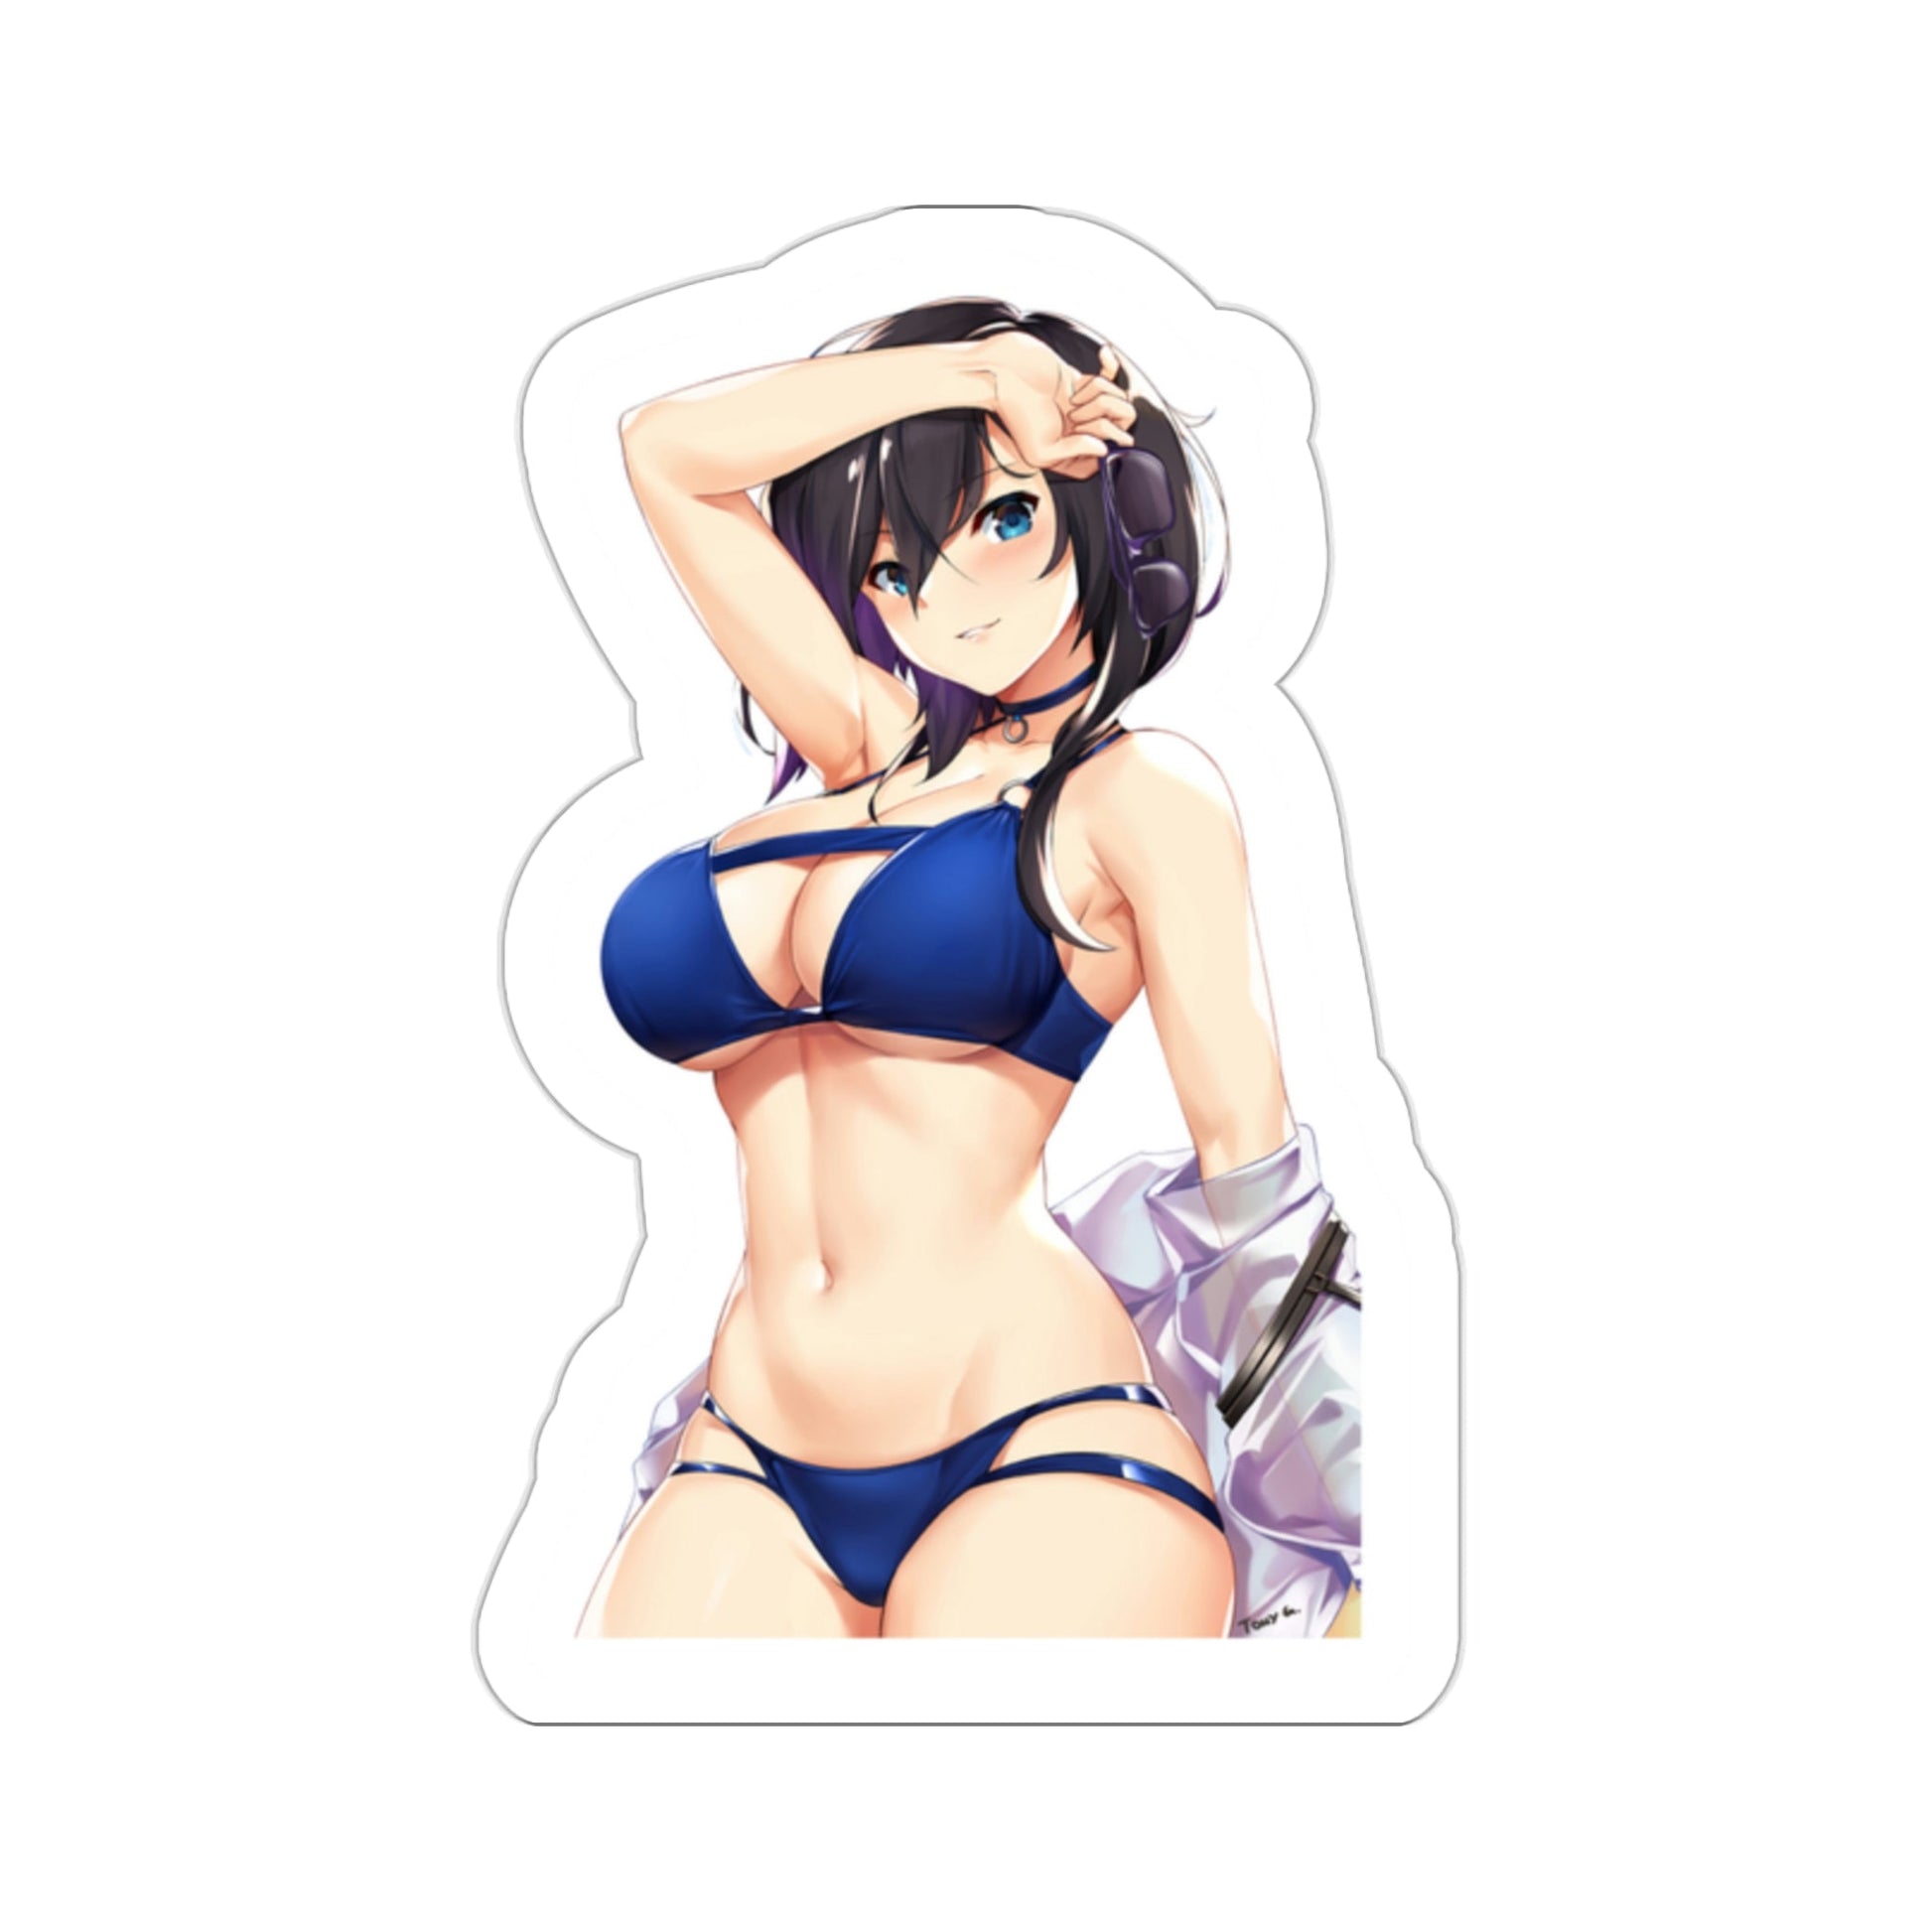 Sexy anime girl Stickers, Bikin Anime girl stickers